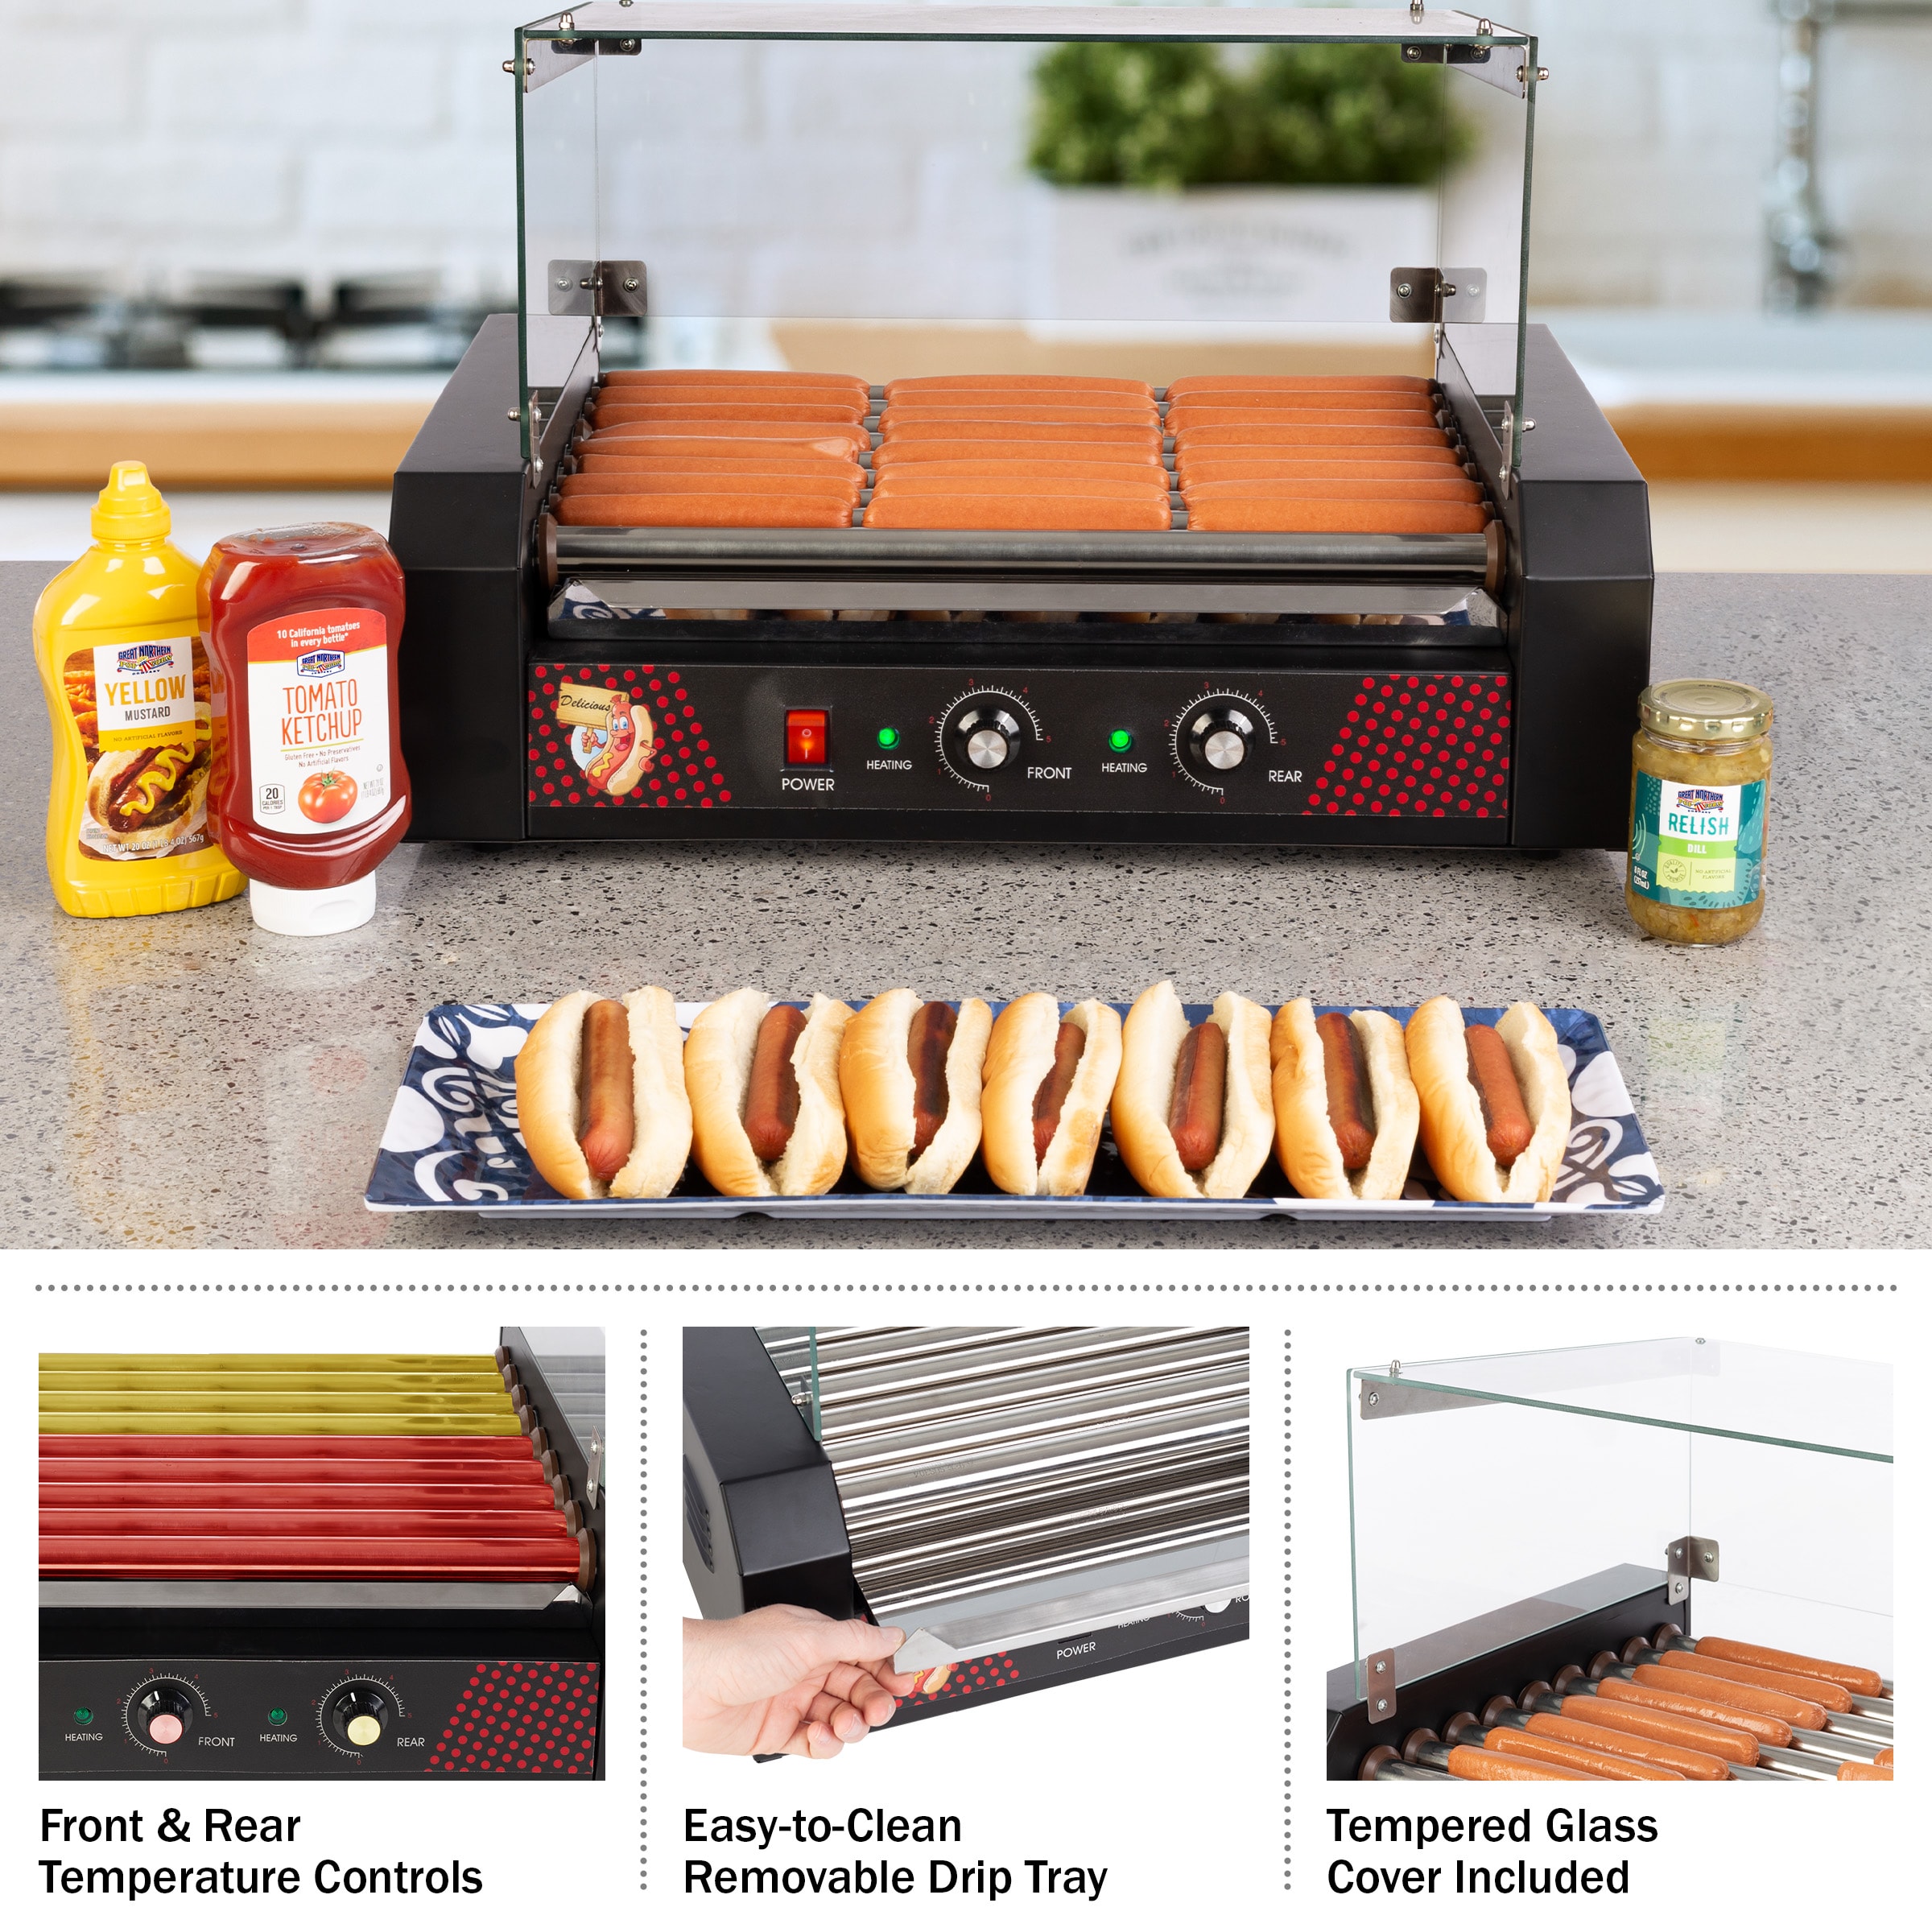 110V Electric Hot Dog Machine 4 Sticks Sausage Bun Warmer Hotdog Steamer  Cook